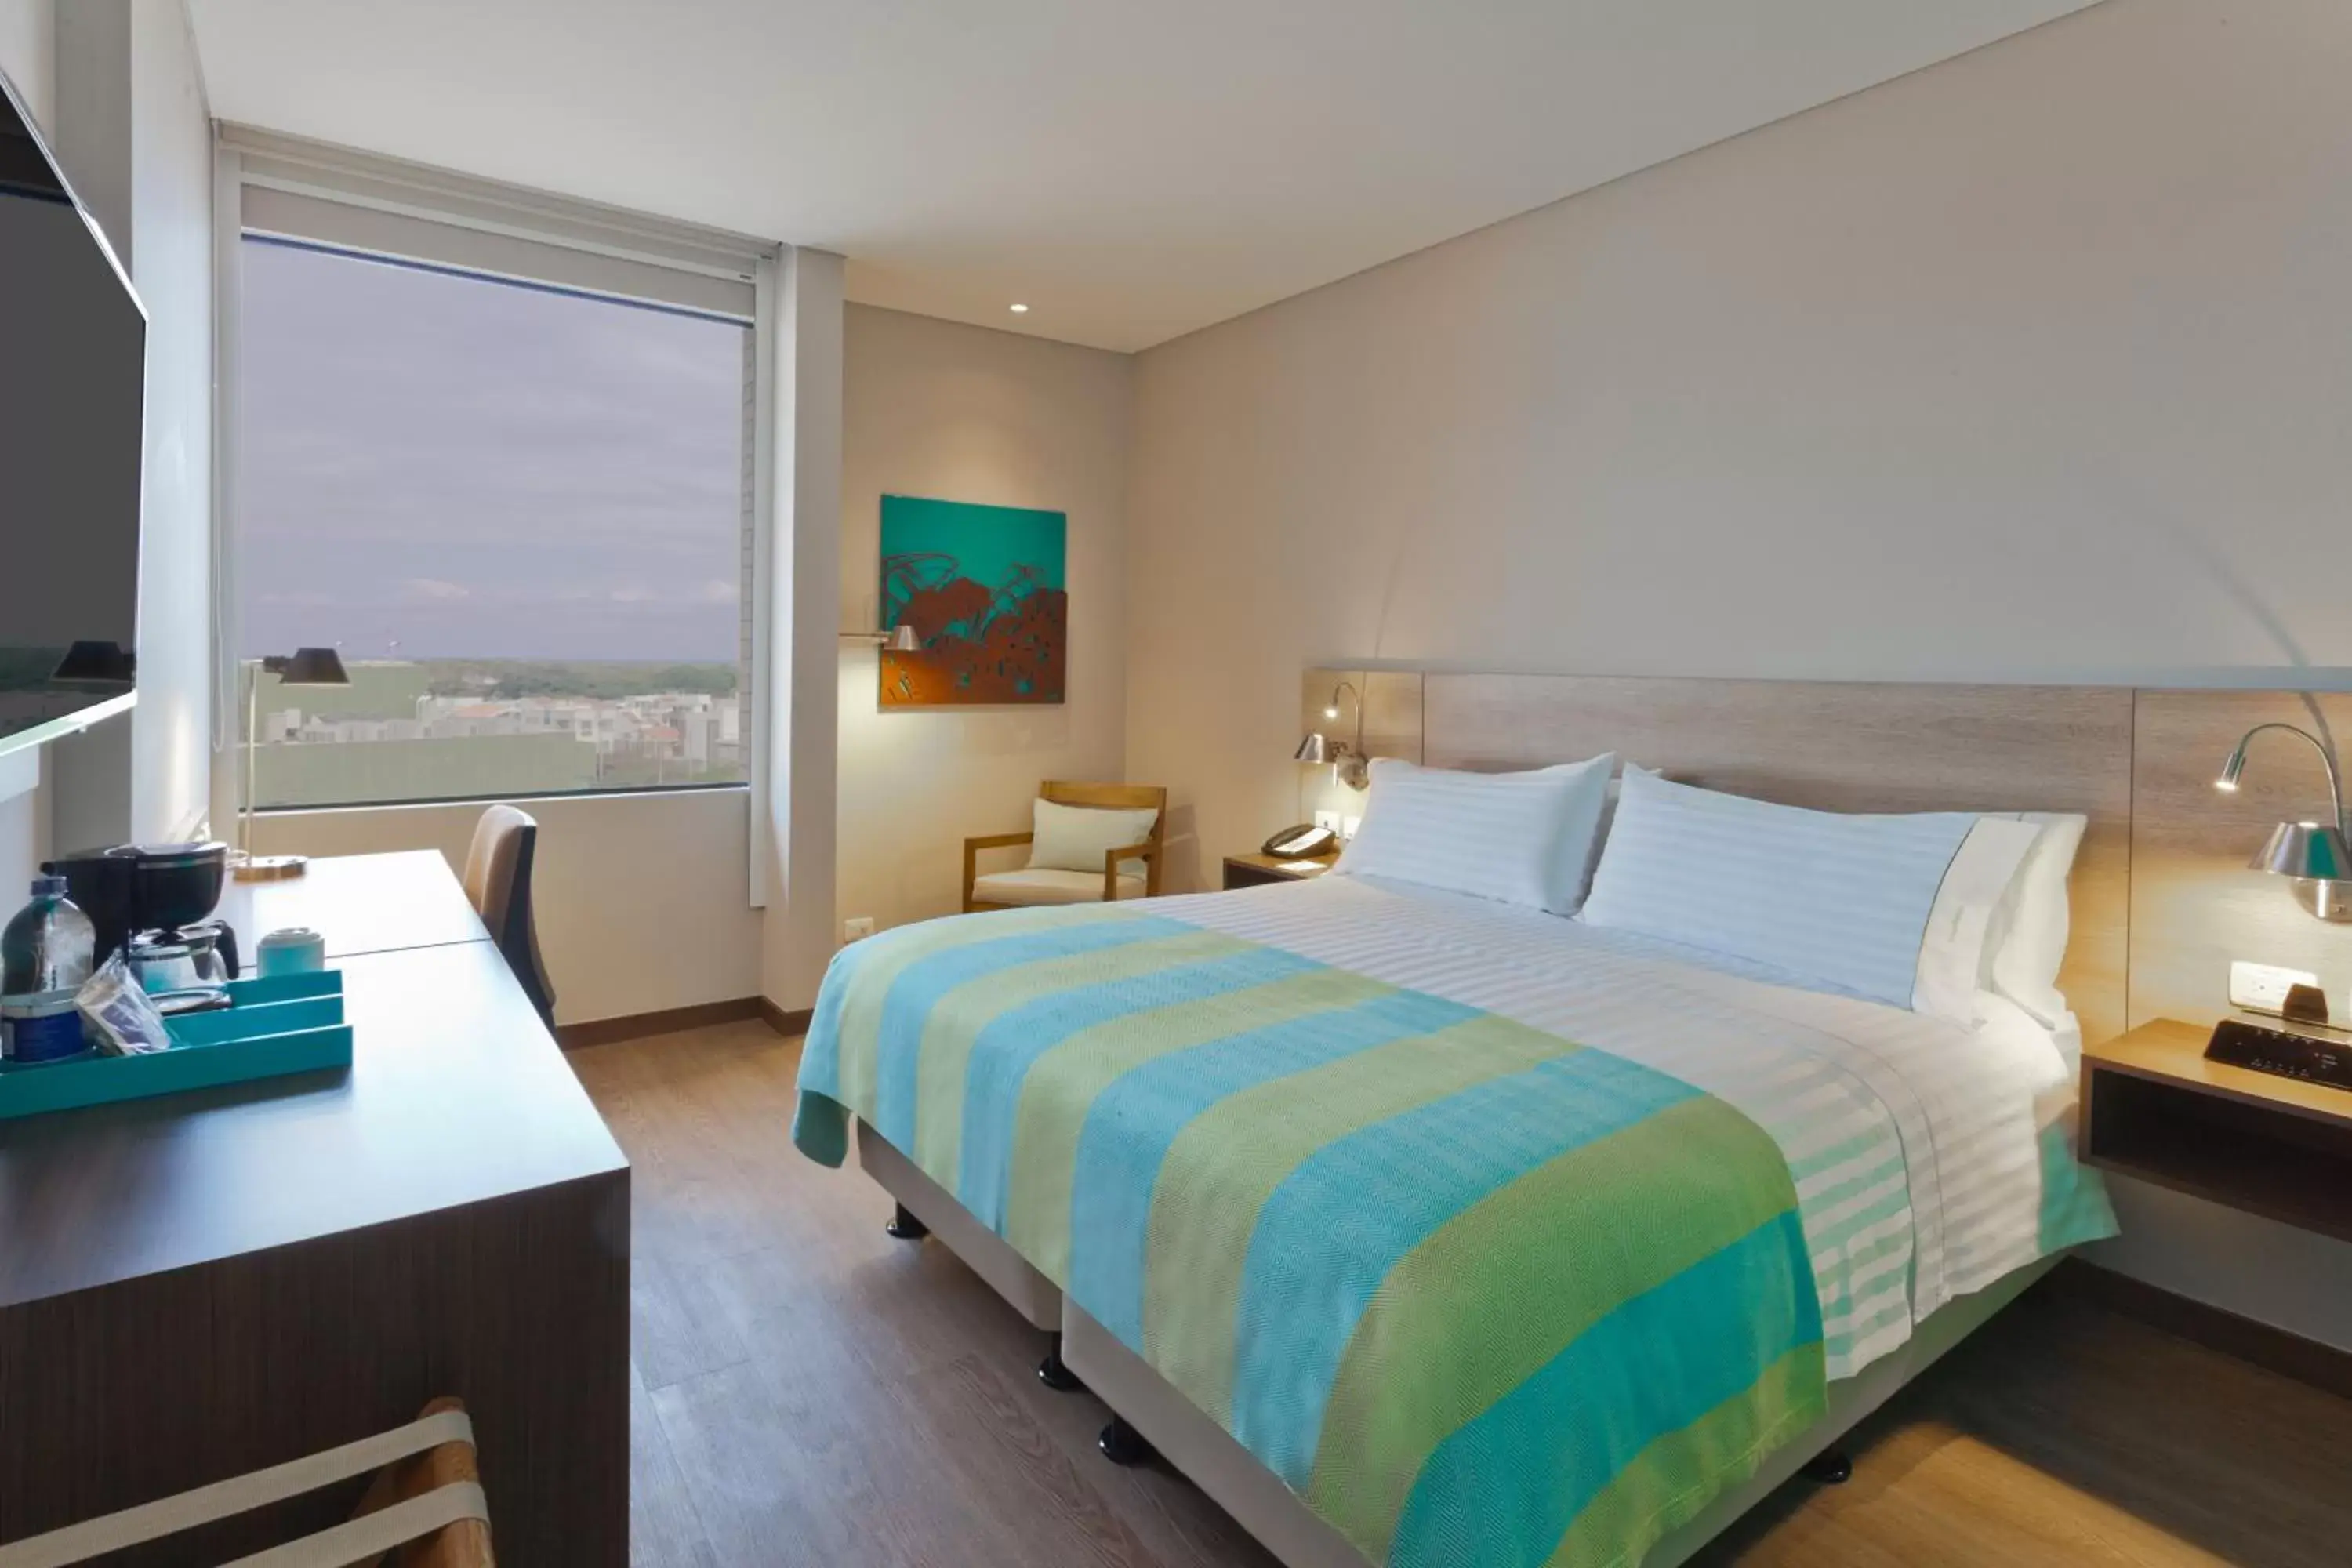 Bed, Room Photo in Holiday Inn Express Yopal, an IHG Hotel